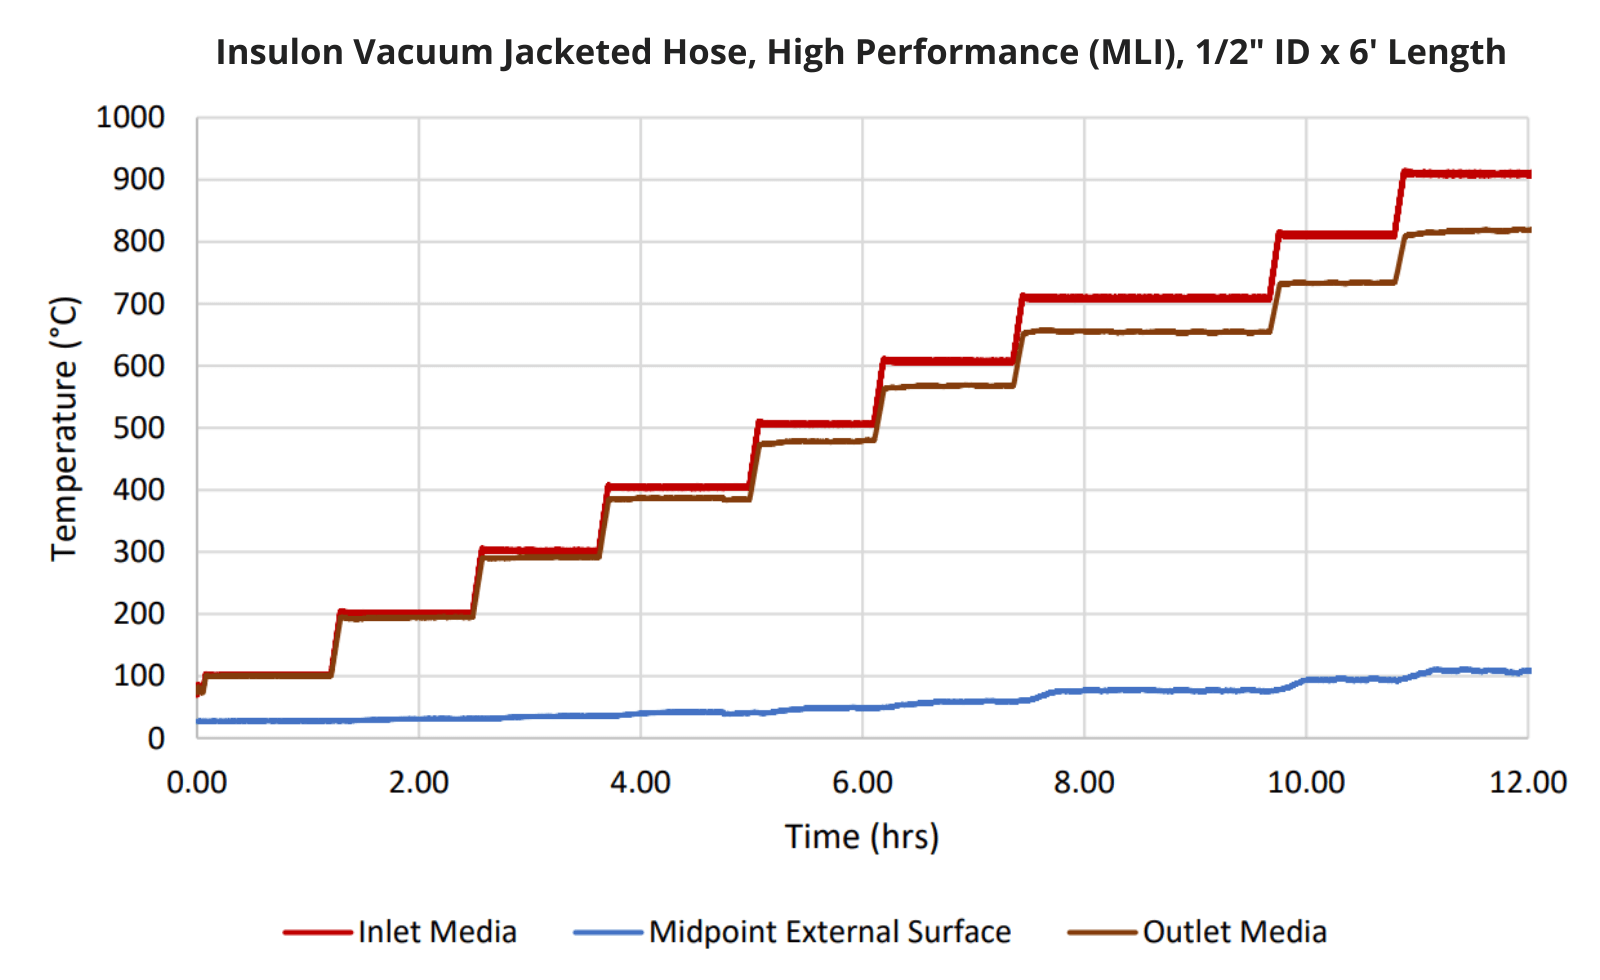 Insulon Vacuum Jacketed Hose, High Performance (MLI), High Temperature